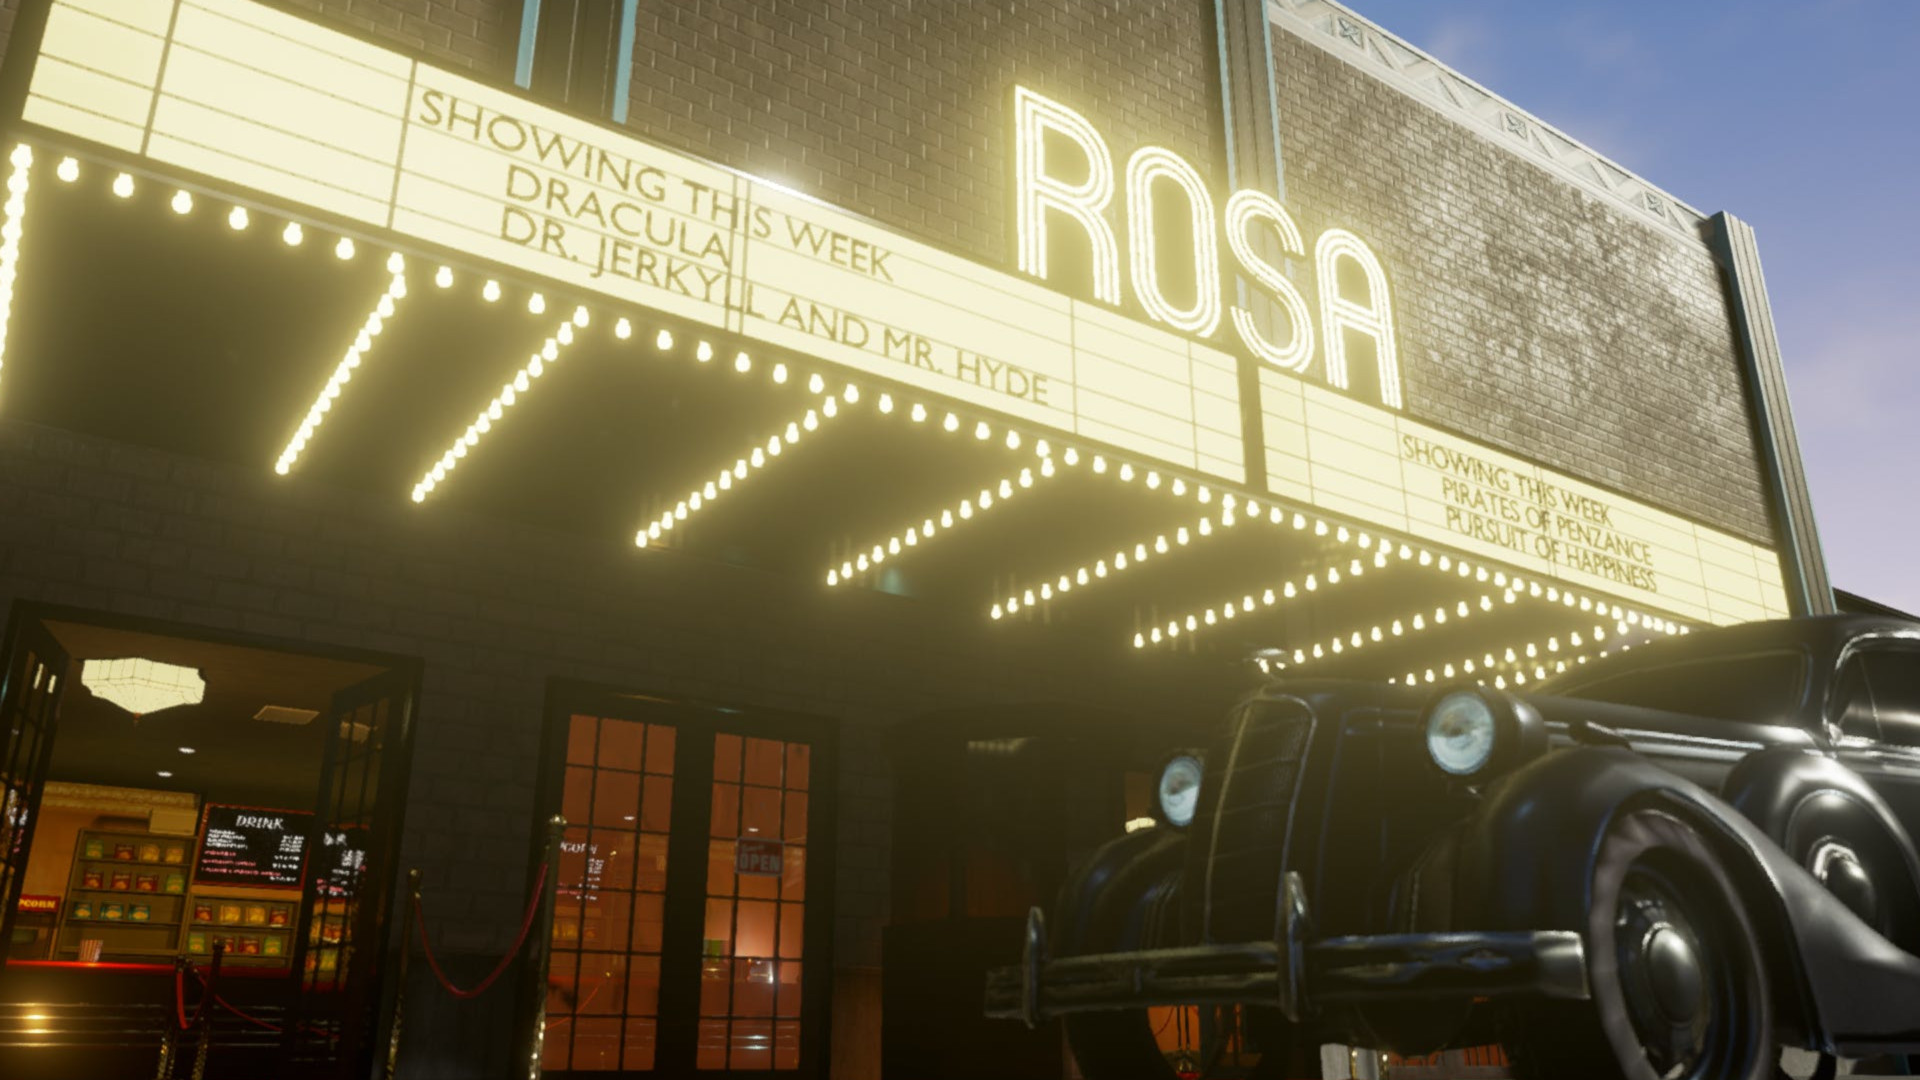 Steam - The Cinema Rosa